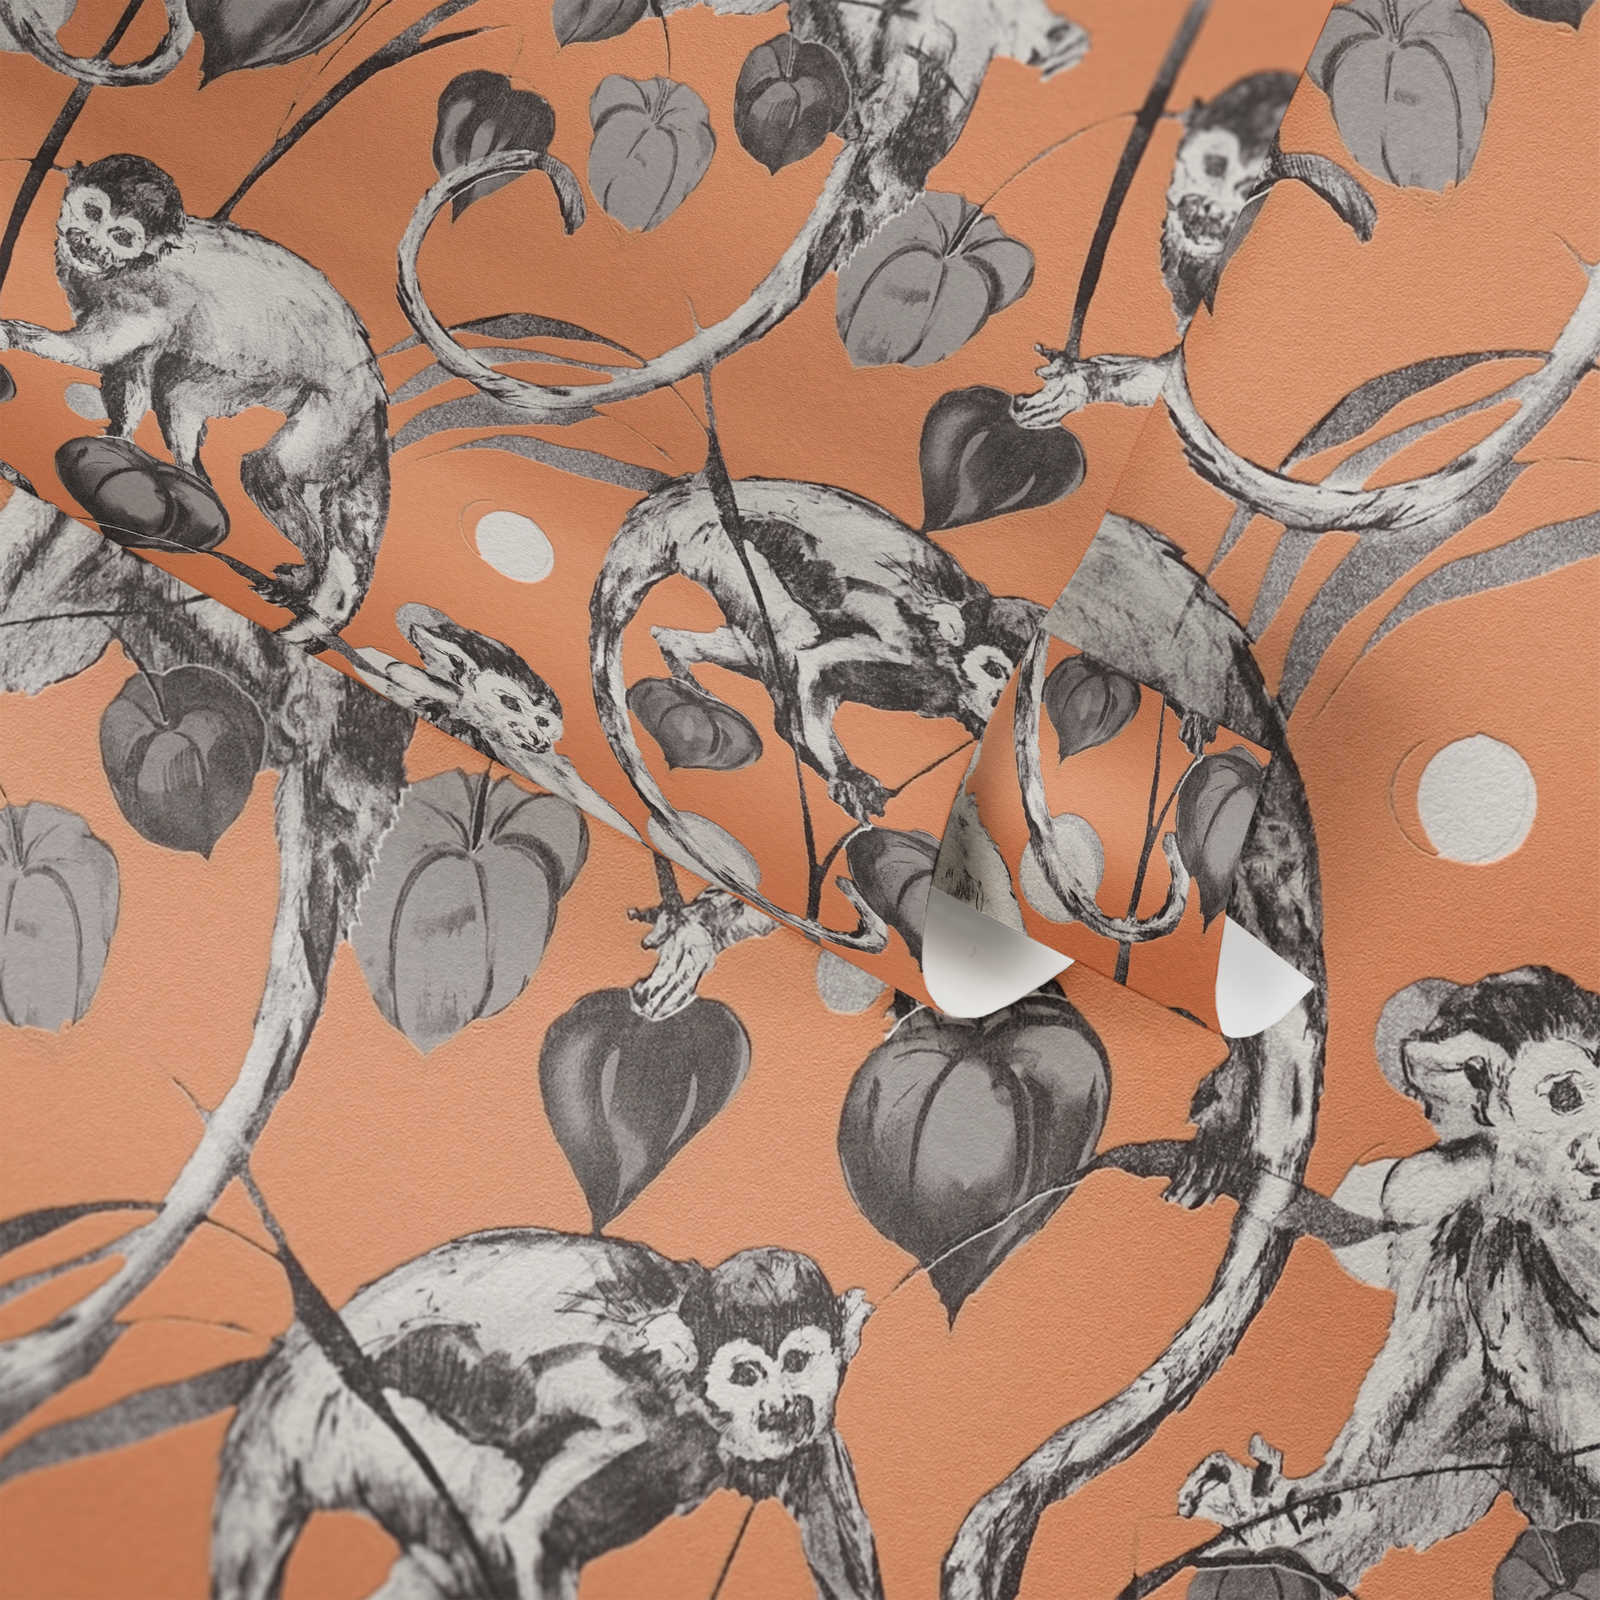             Papel pintado MICHALSKY motivo mono y selva - naranja, gris
        